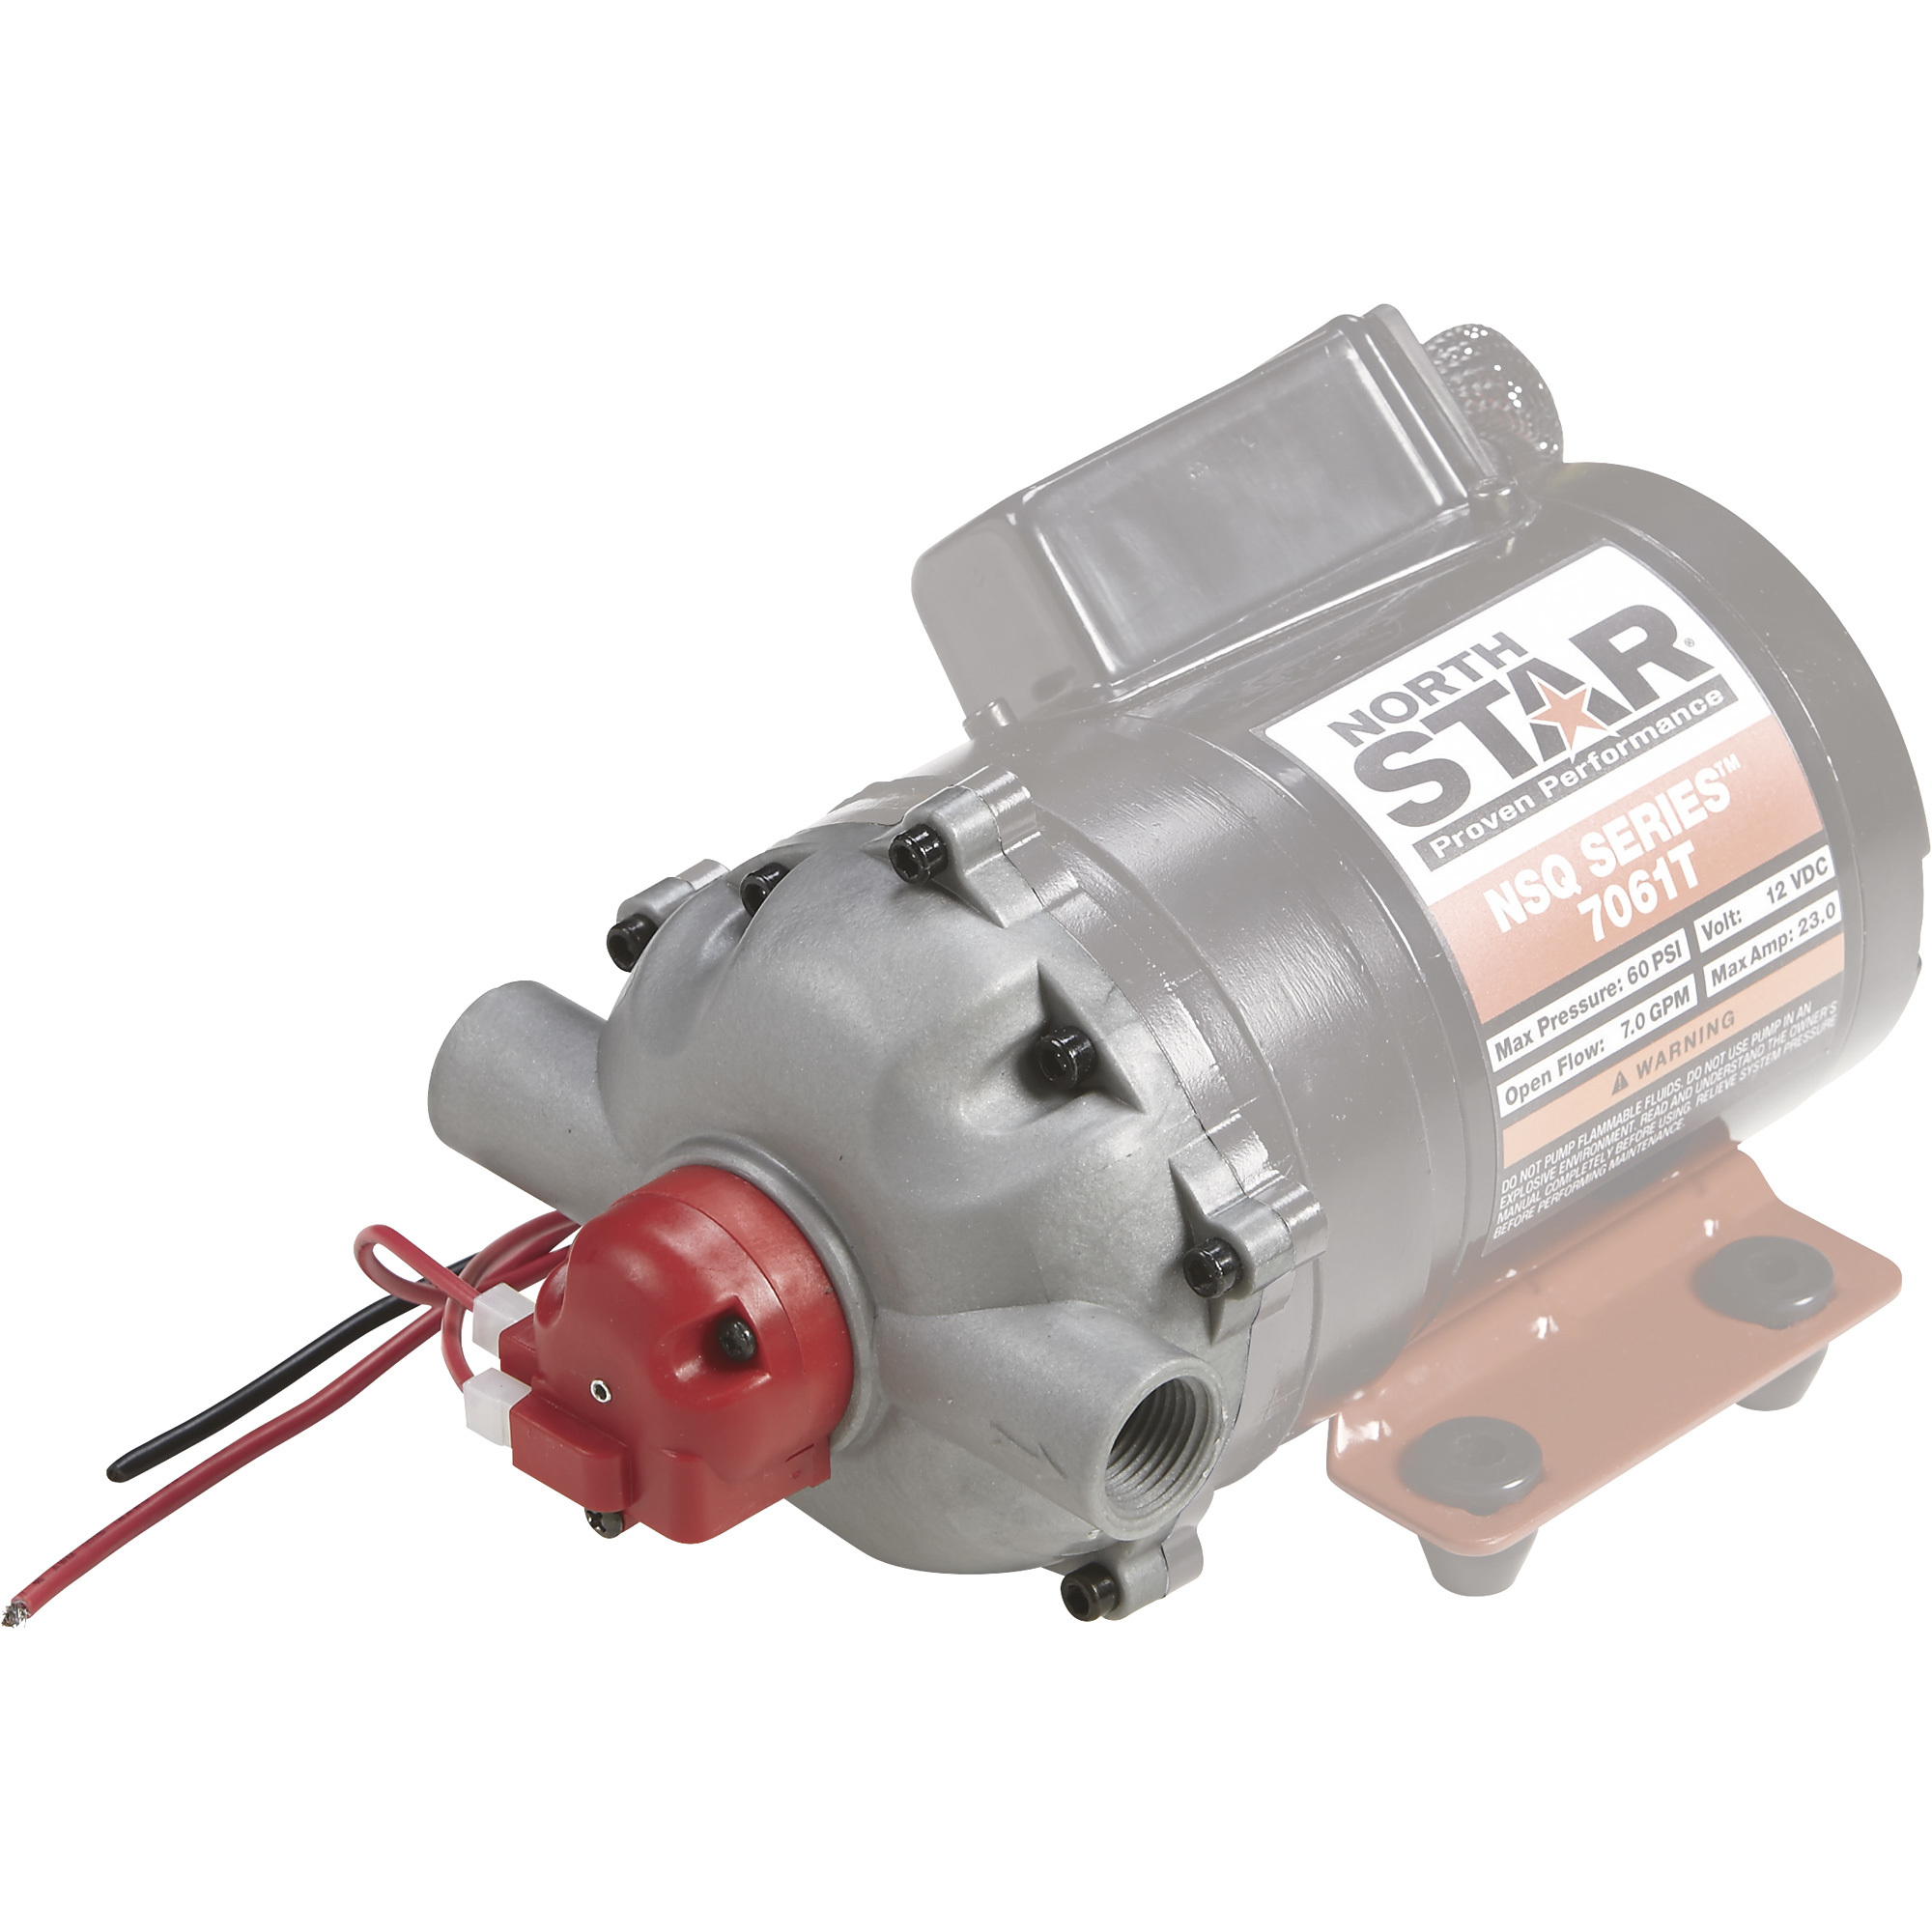 NorthStar Replacement Sprayer Pump Head â 7 GPM, 1/2Inch NPT Ports, 60 PSI, Model A2687061